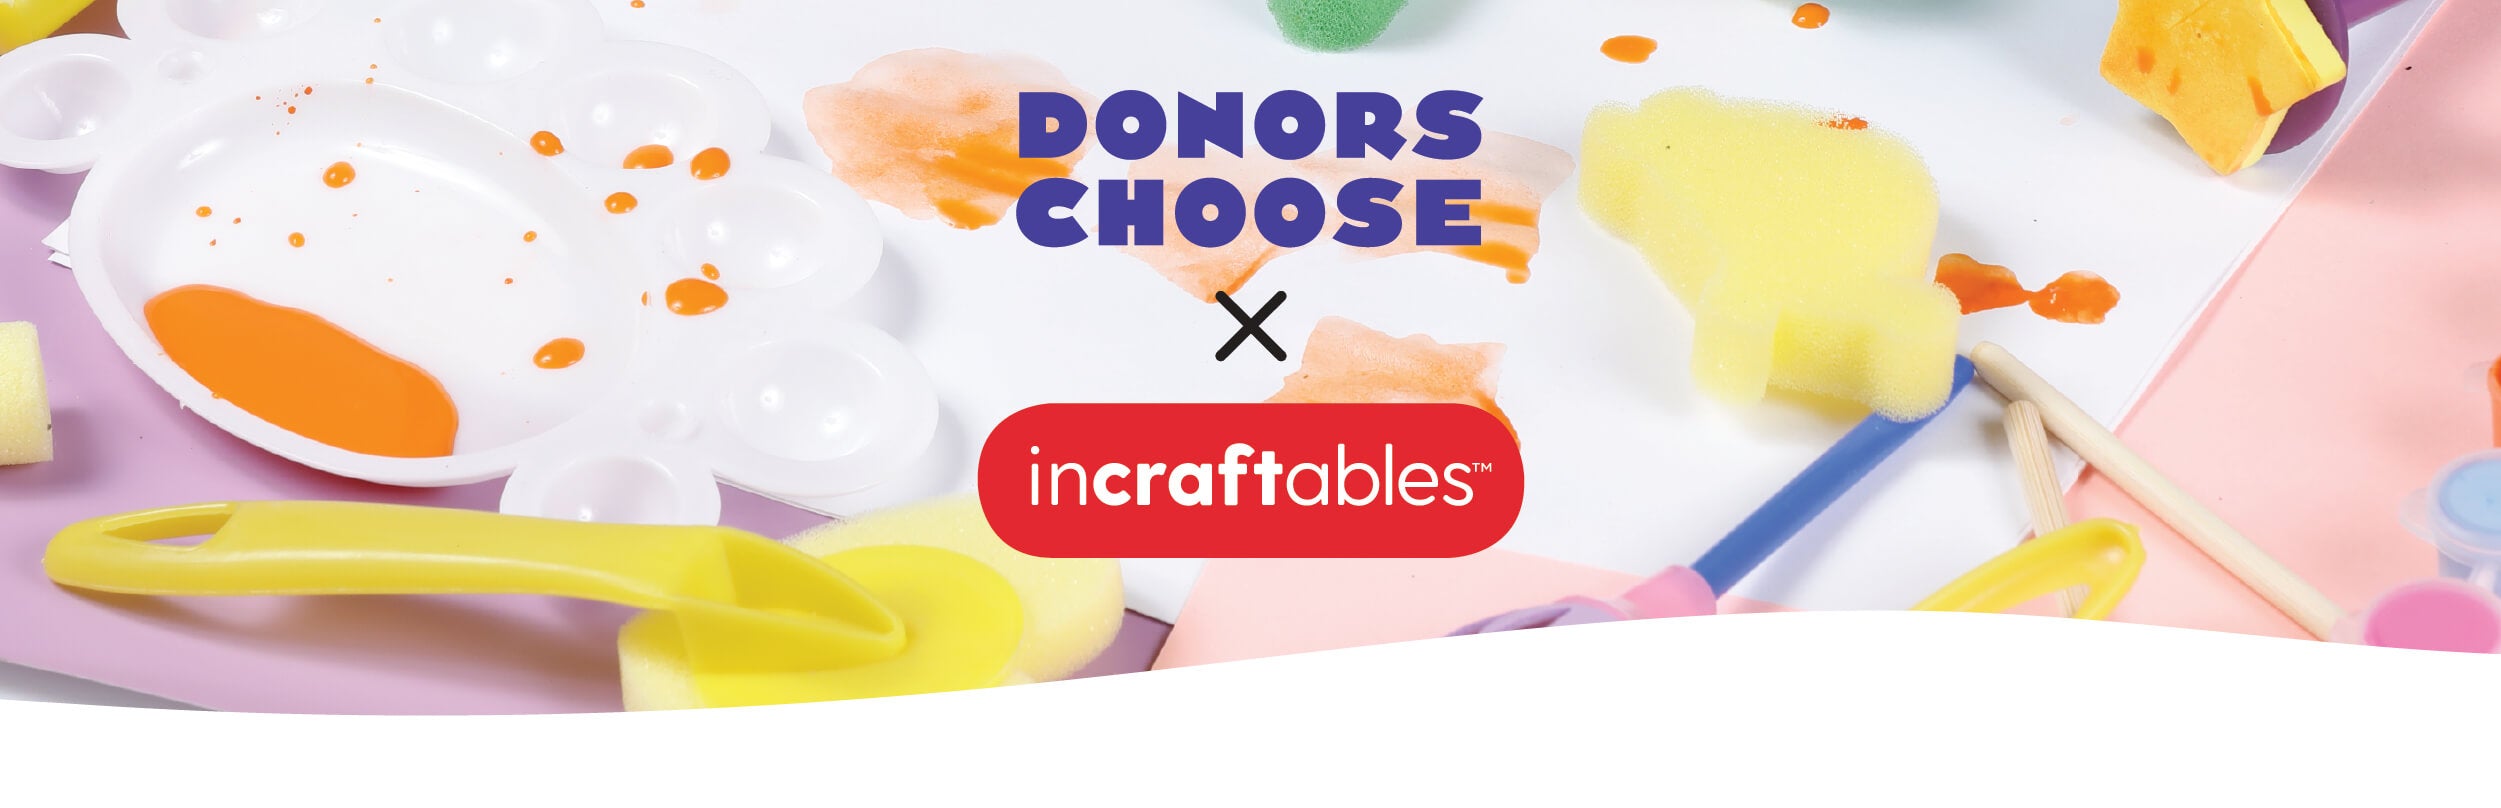 DonorsChoose x Incraftables